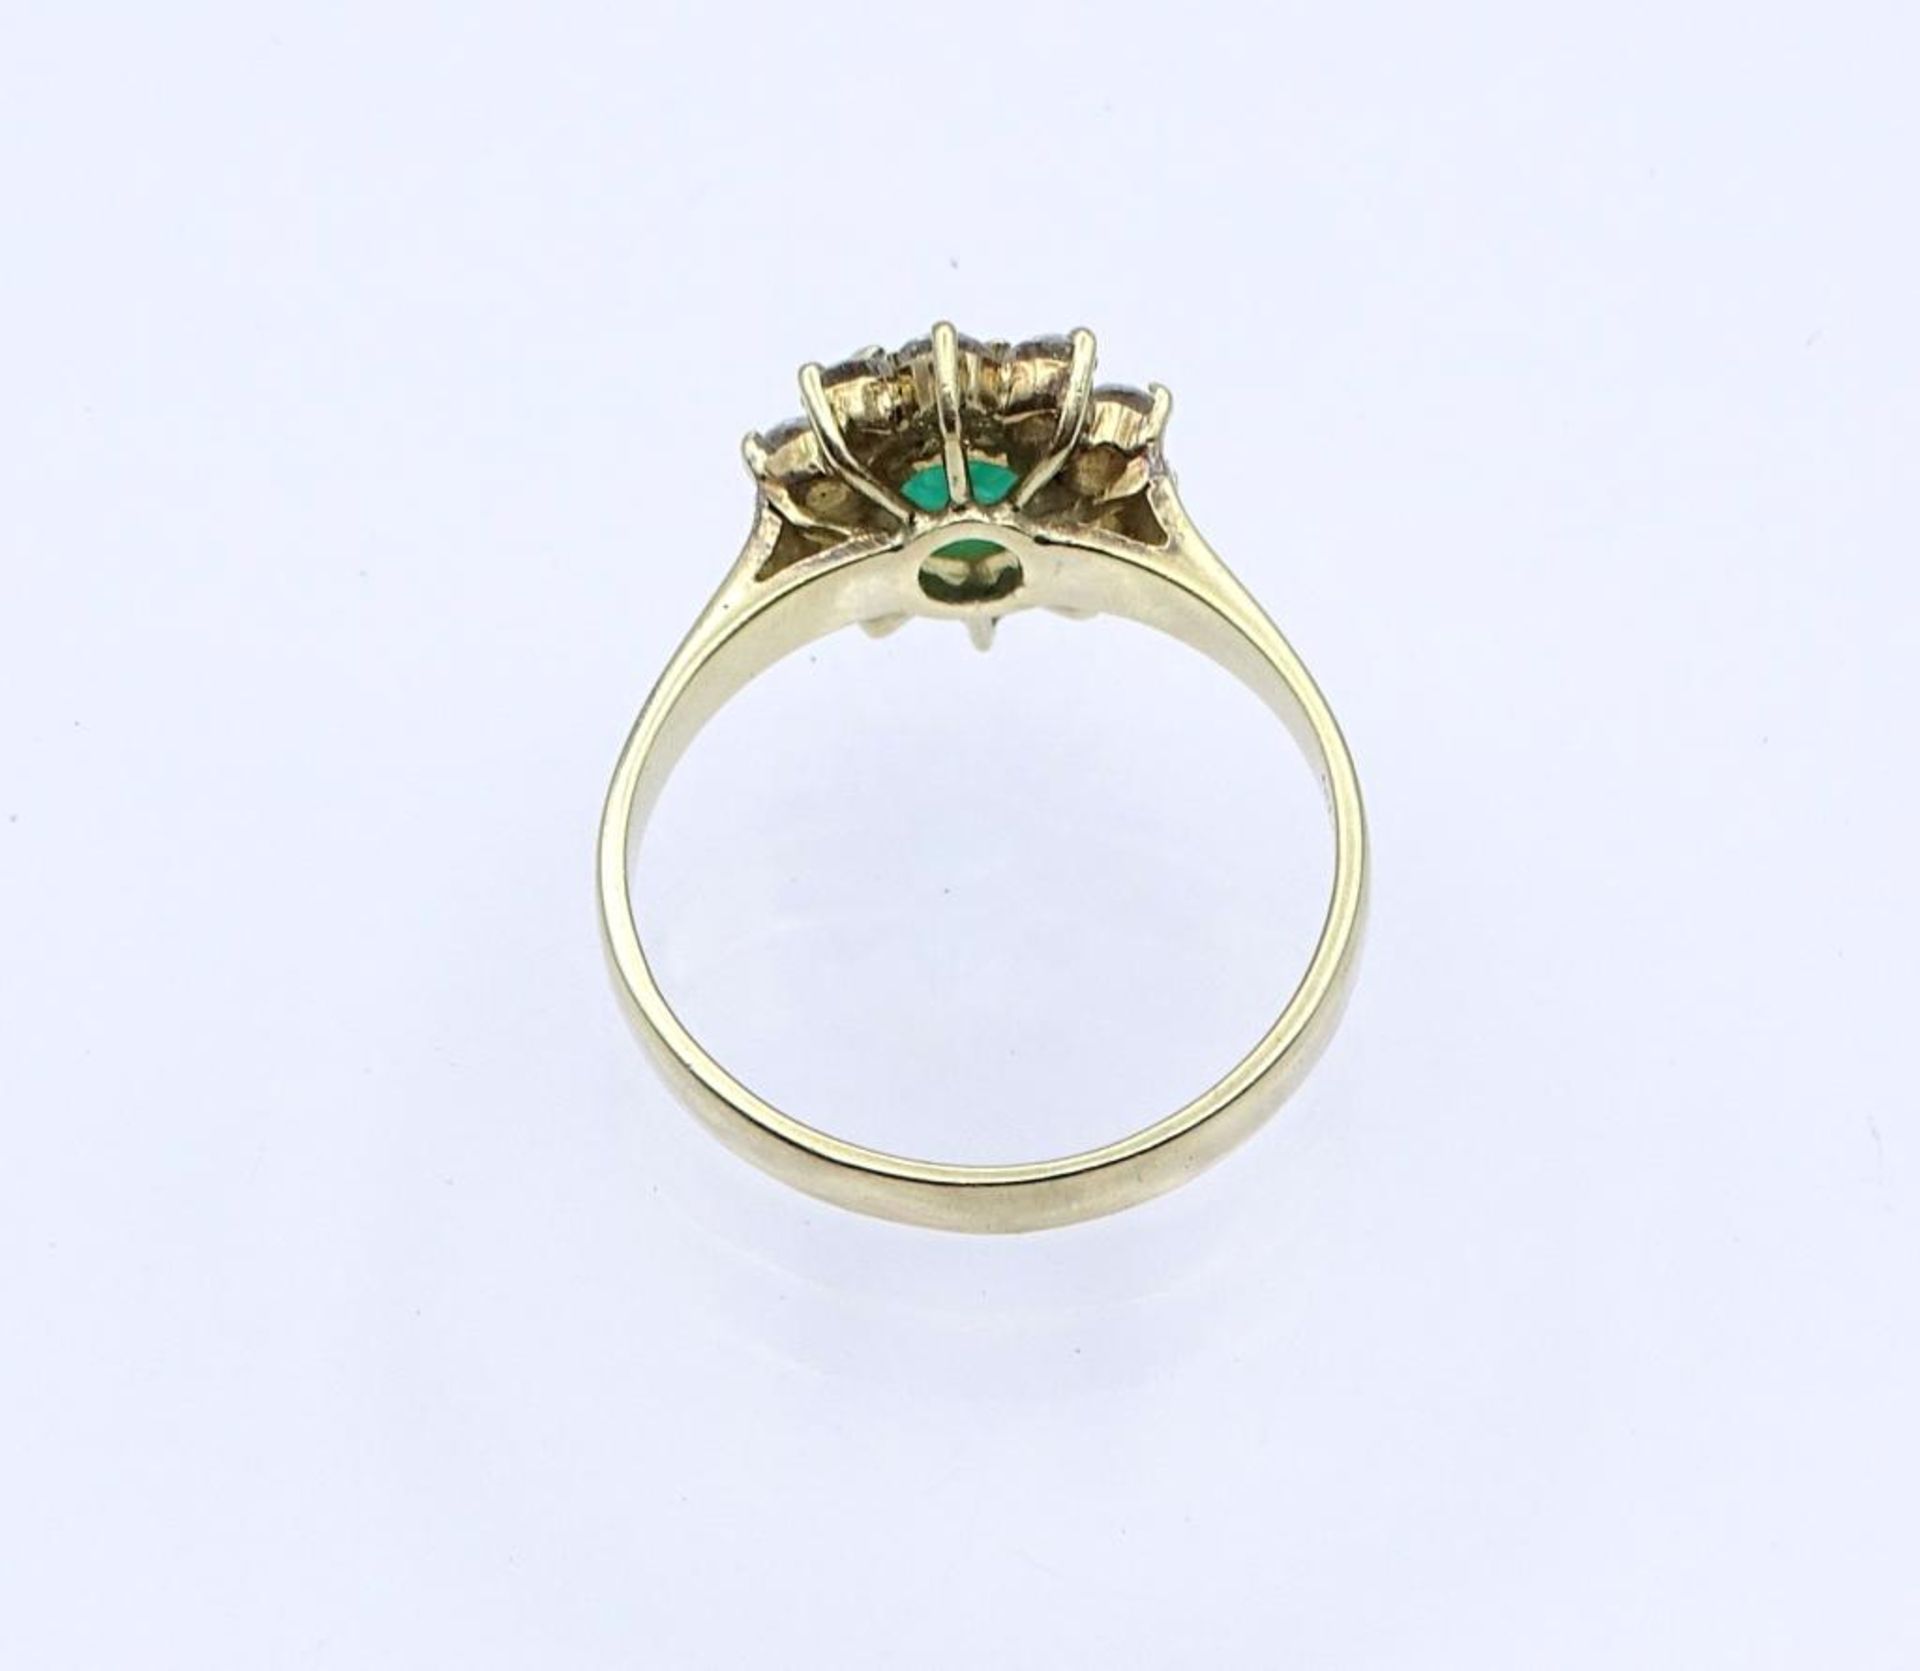 Smaragd-Zirkonia-Ring, GG 585/000, 3,40gr., RG 55- - -22.61 % buyer's premium on the hammer priceVAT - Bild 3 aus 3